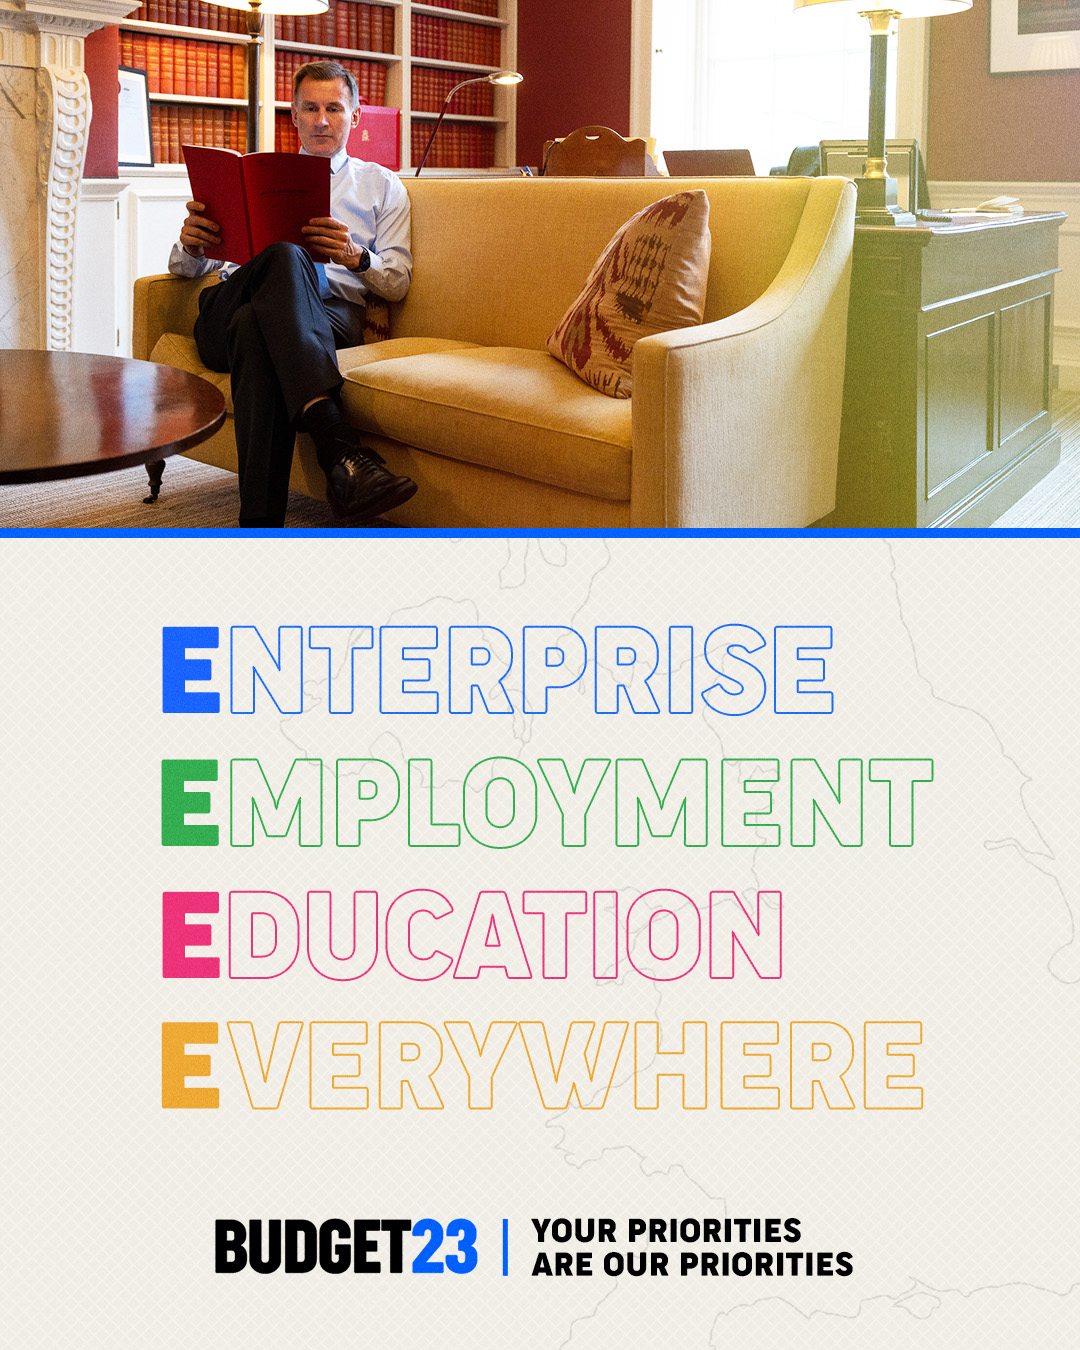 The 4 'E's: Enterprise, Employment, Education, Everywhere